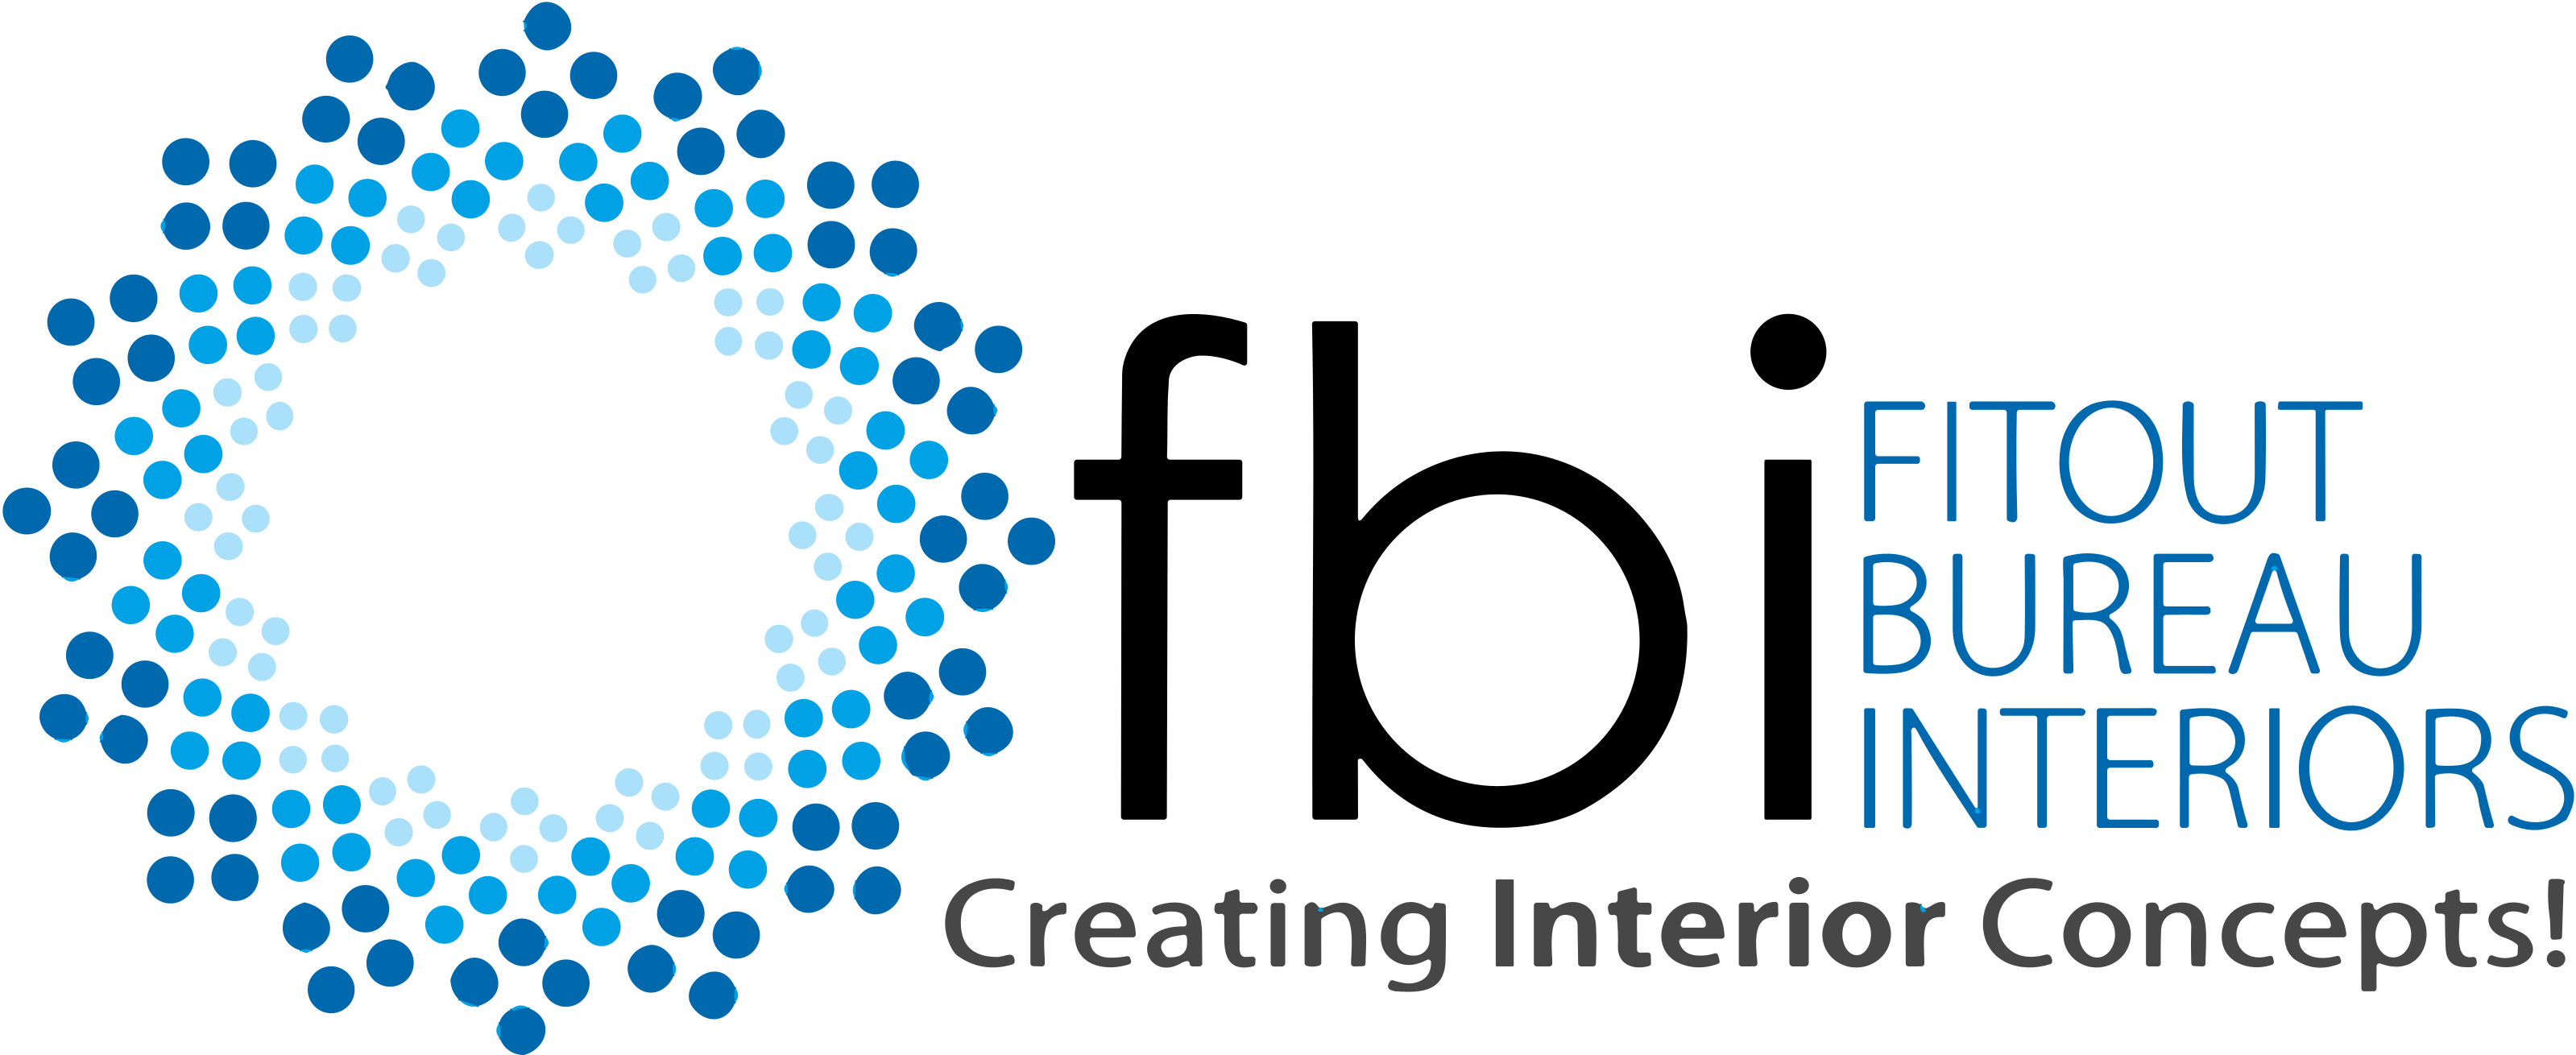 Fitout Bureau Interiors Logo